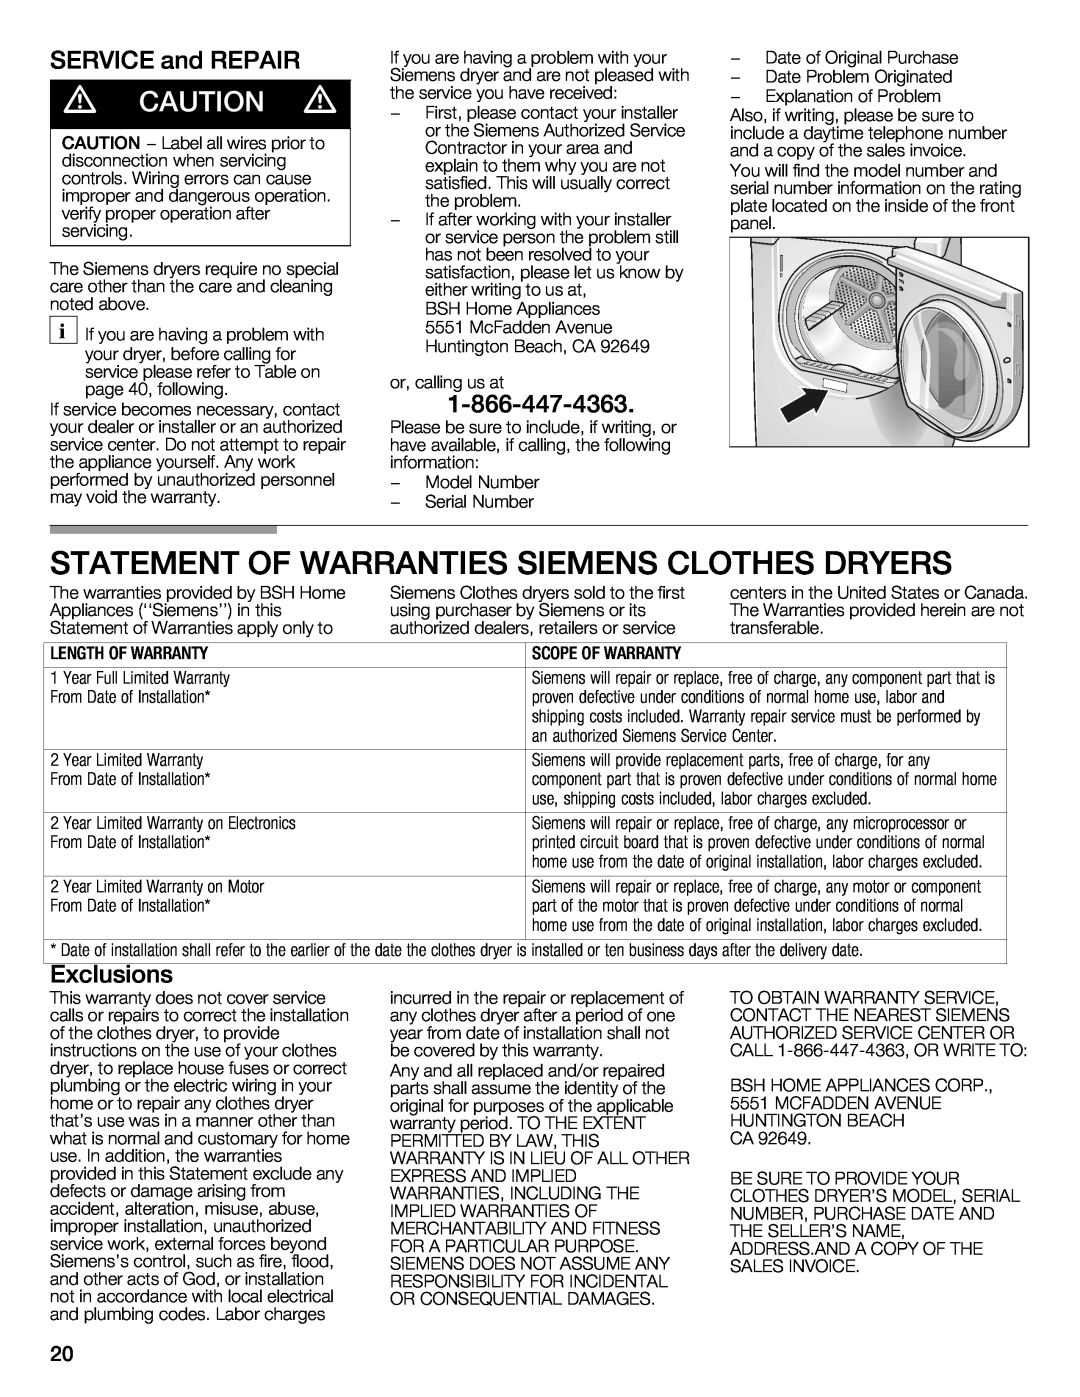 Bosch Appliances WTXD5321US Statement Of Warranties Siemens Clothes Dryers, Repair, Exclusions, Service, 1W866W447W4363 